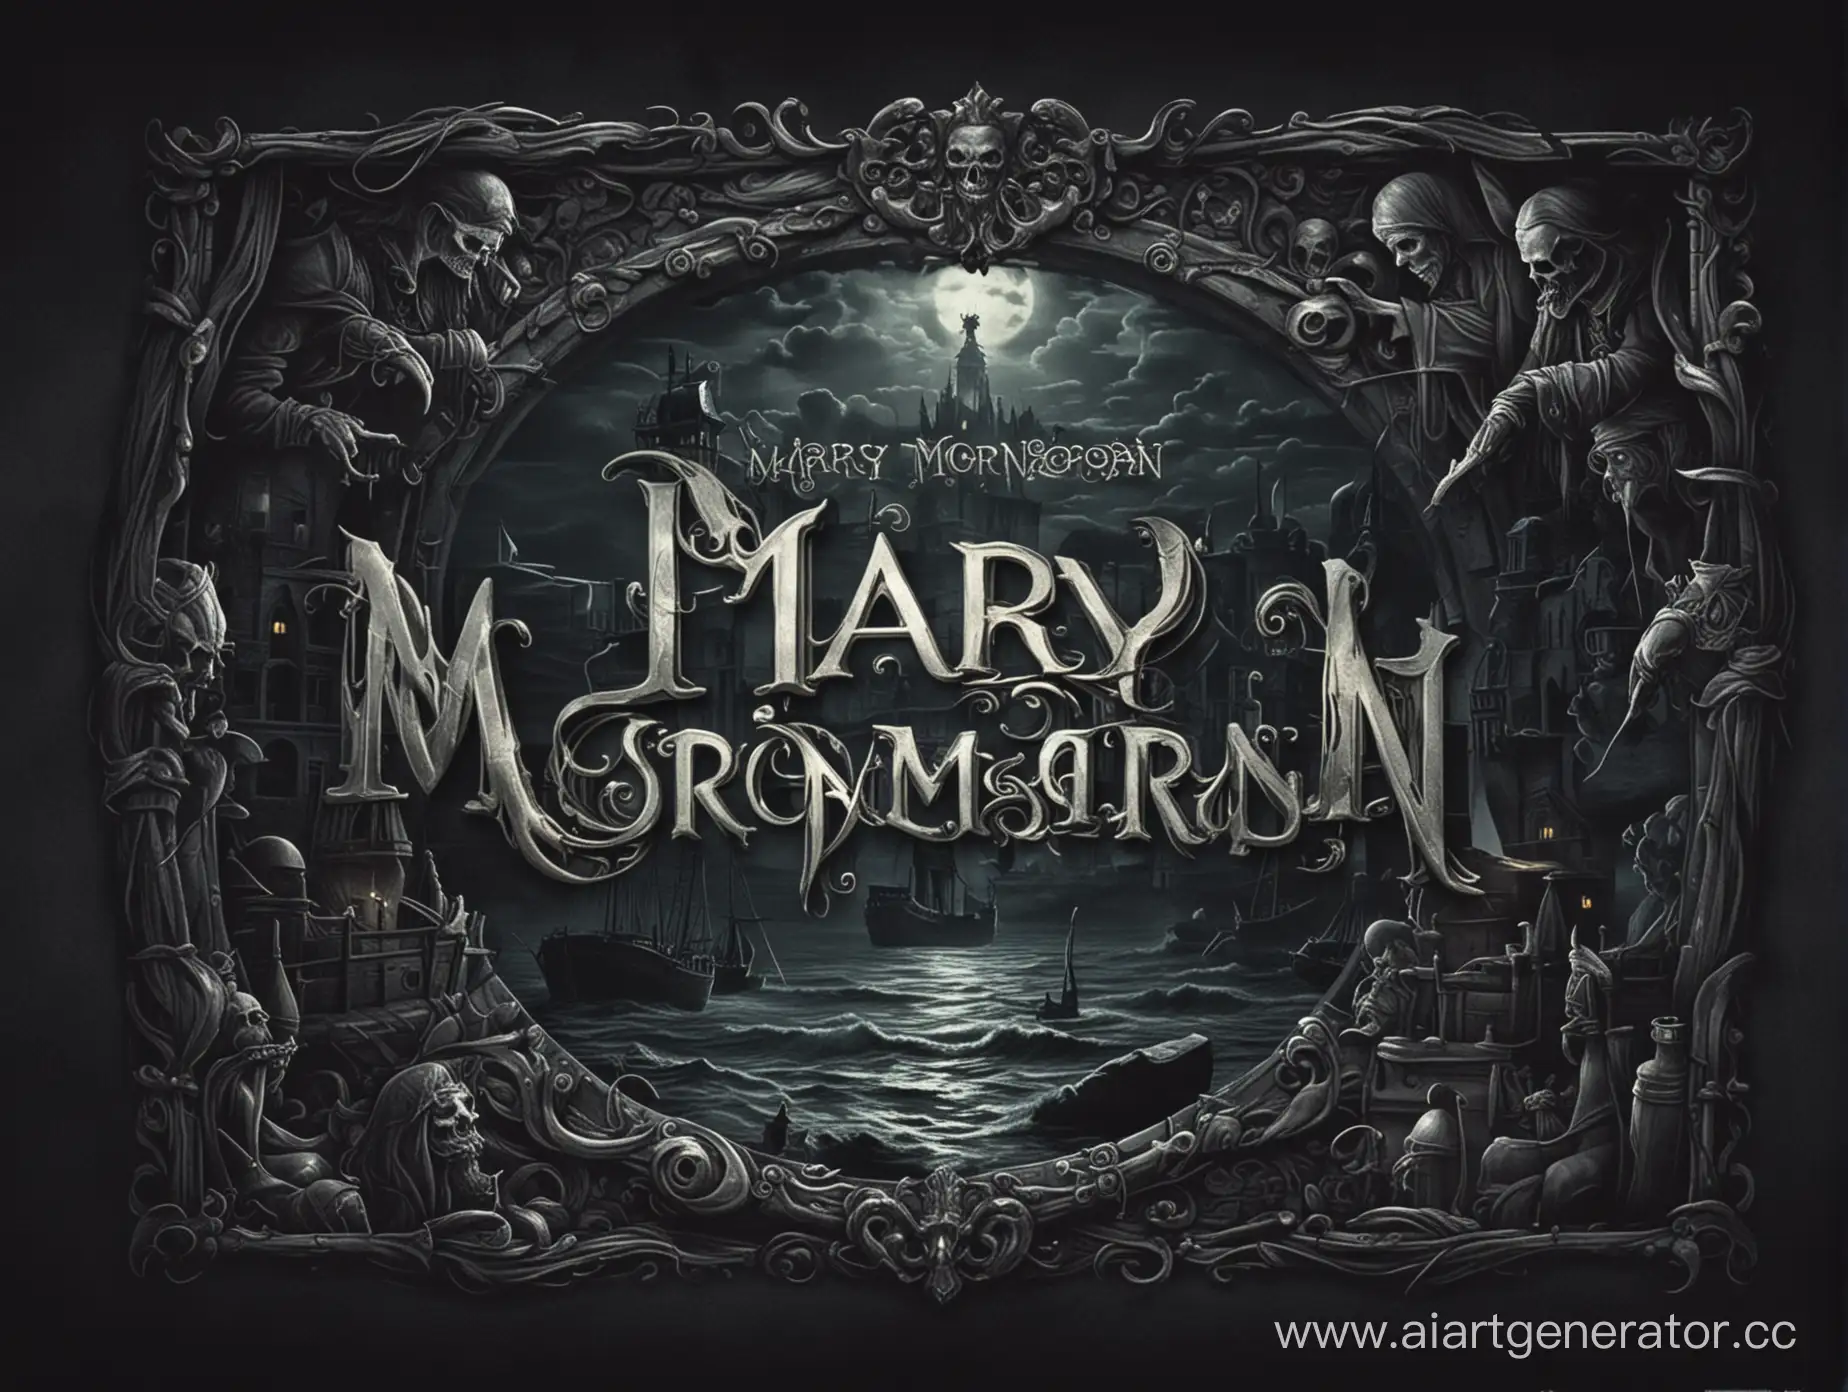 Dark-and-Mysterious-Main-Menu-Interface-of-Mary-Morgan-Game